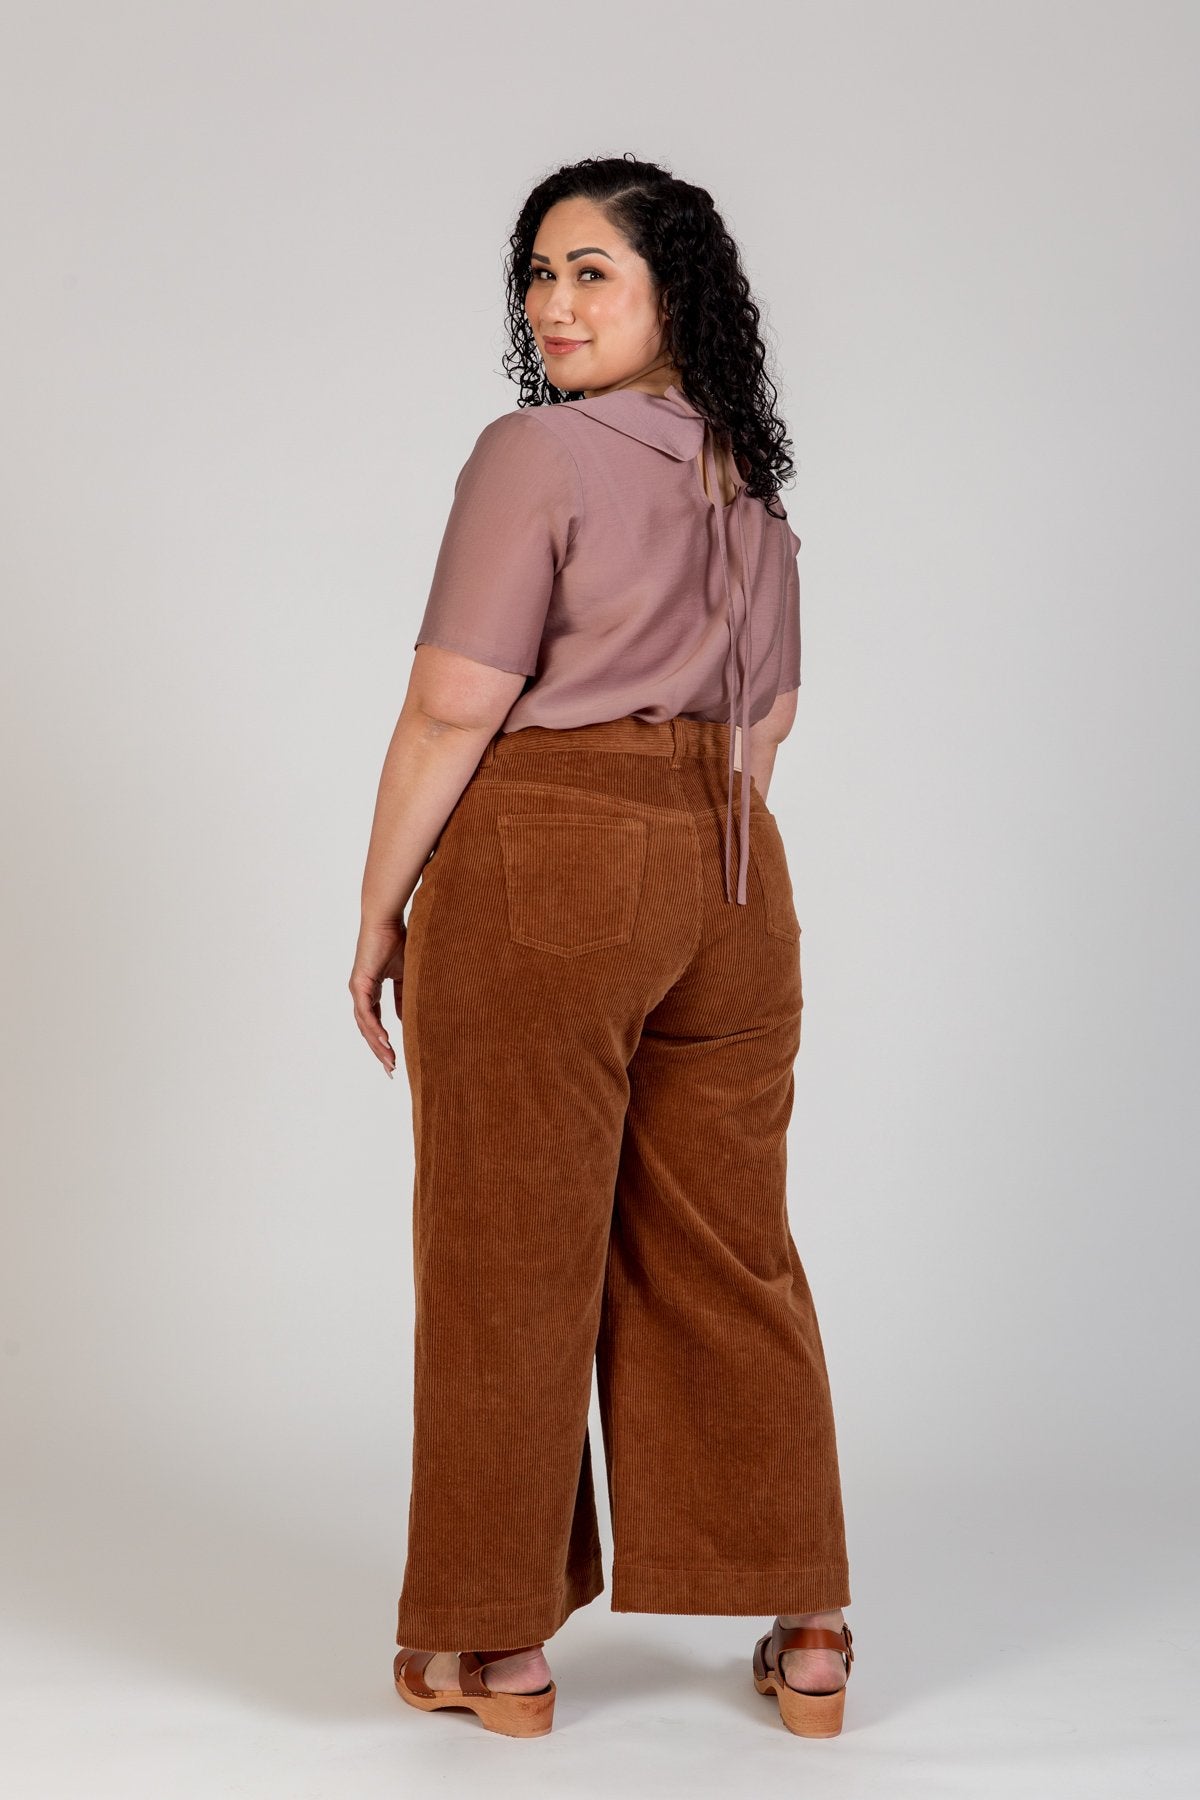 Dawn Curve Jeans (4 in 1!) Sewing Pattern | Megan Nielsen Patterns ...